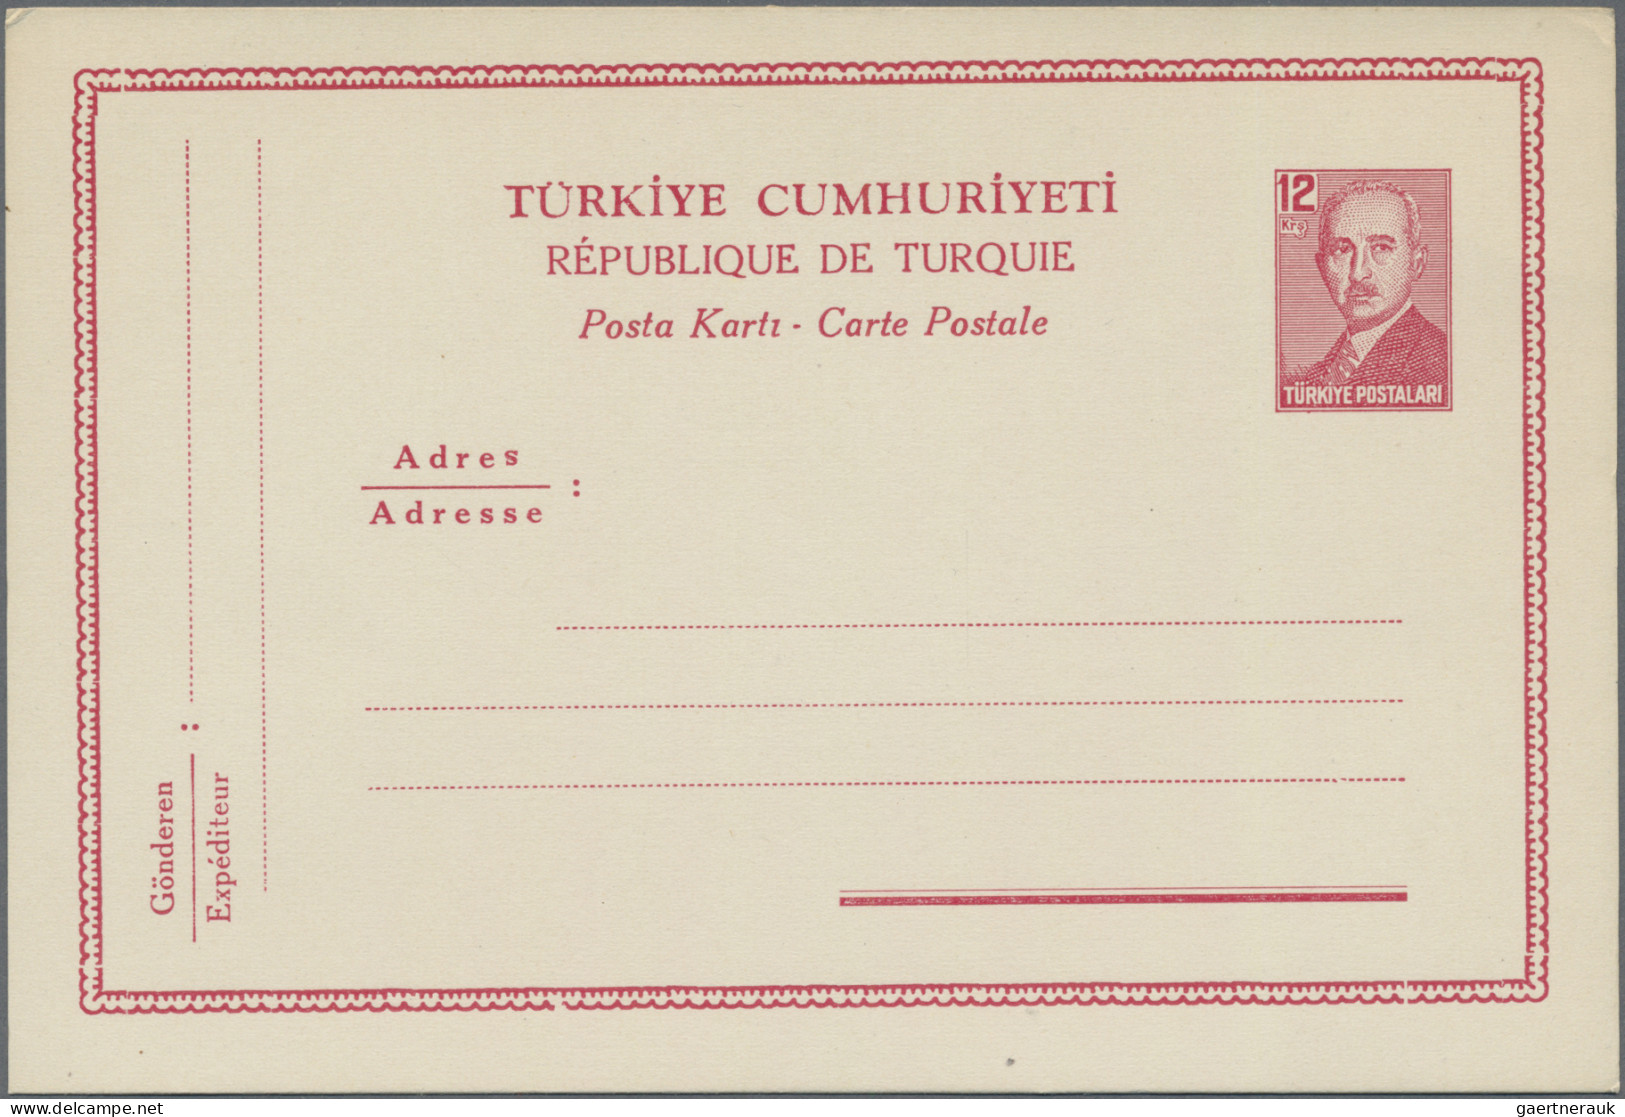 Turkey - Postal stationery: 1949, President Inönü, complete set of four mint pos